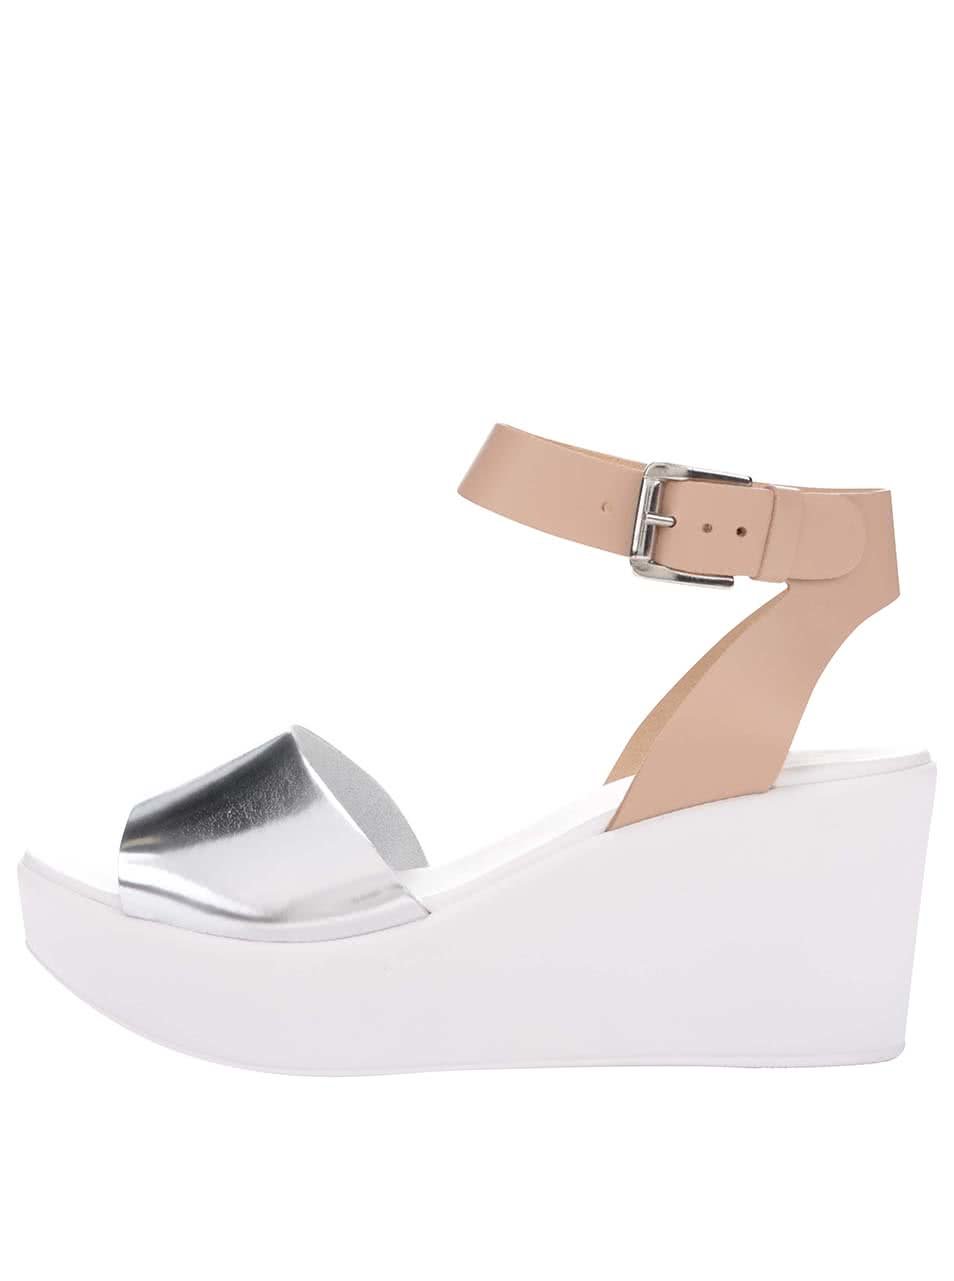 Béžovo-bílé kožené sandály na platformě Miss Selfridge